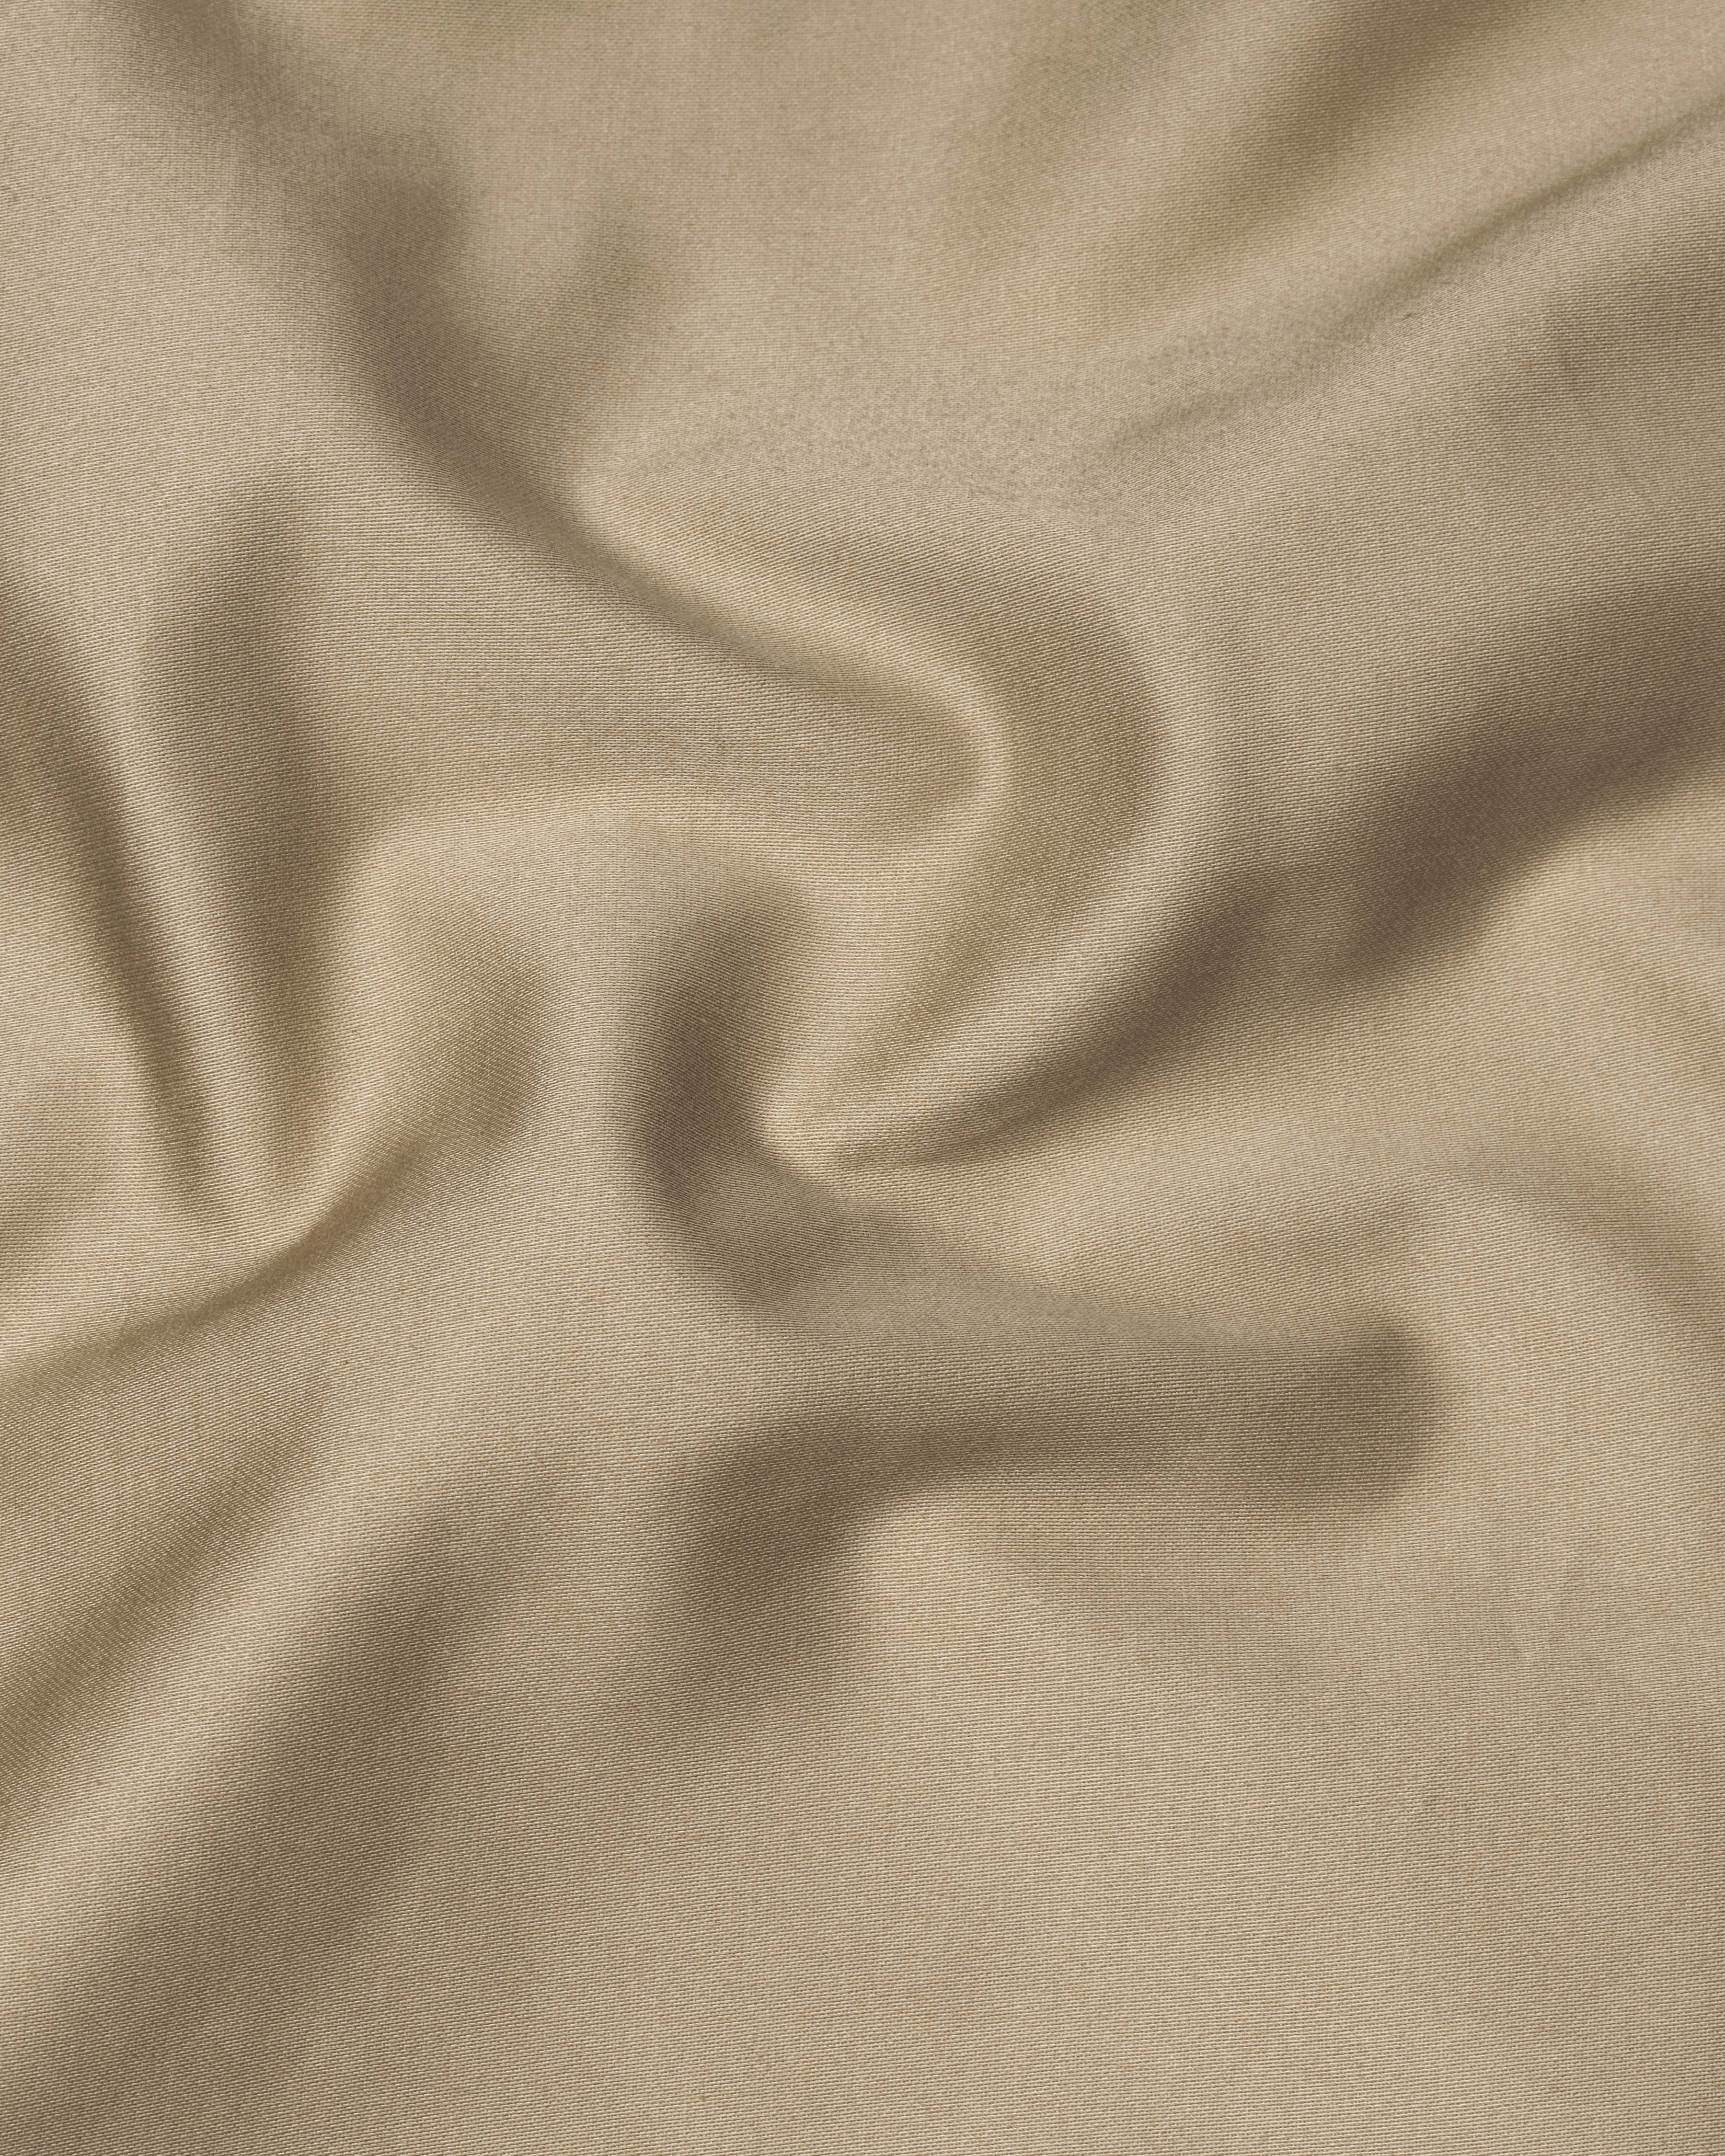 Quicksand Brown Stretchable Premium Cotton Waistcoat V2652-36, V2652-38, V2652-40, V2652-42, V2652-44, V2652-46, V2652-48, V2652-50, V2652-52, V2652-54, V2652-56, V2652-58, V2652-60